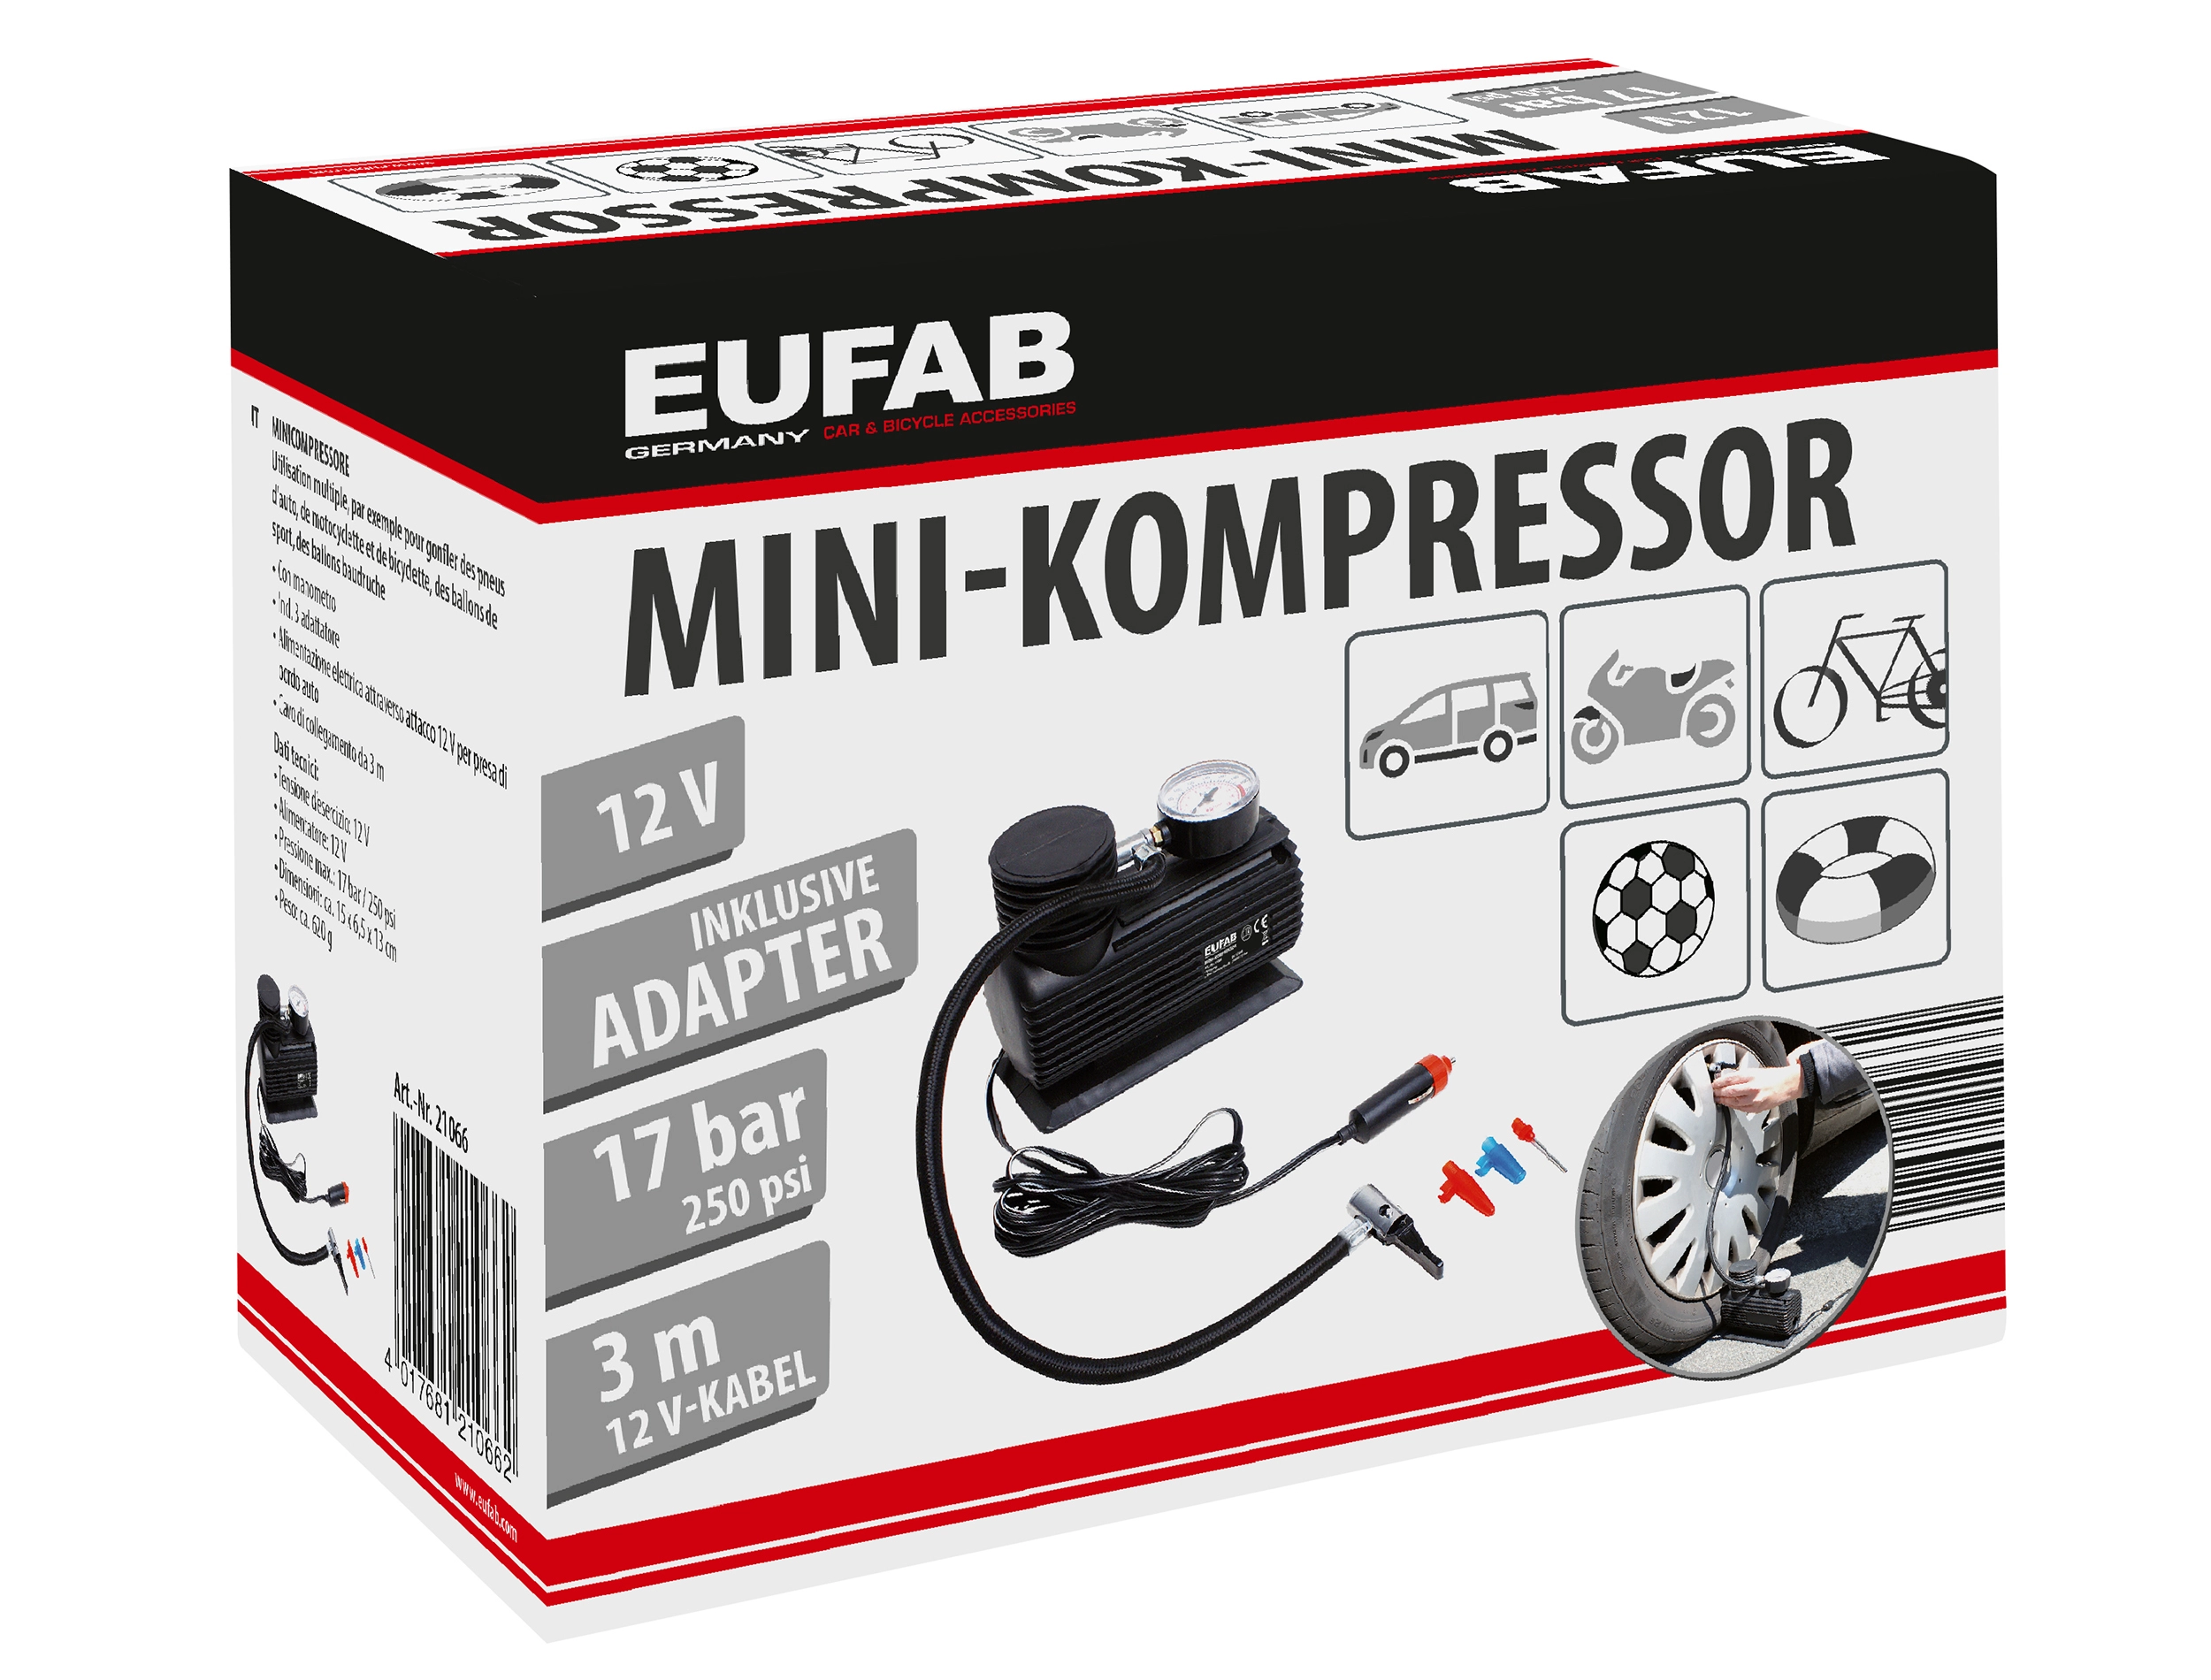 OBI kaufen 12 bei Eufab Mini-Kompressor V 21066